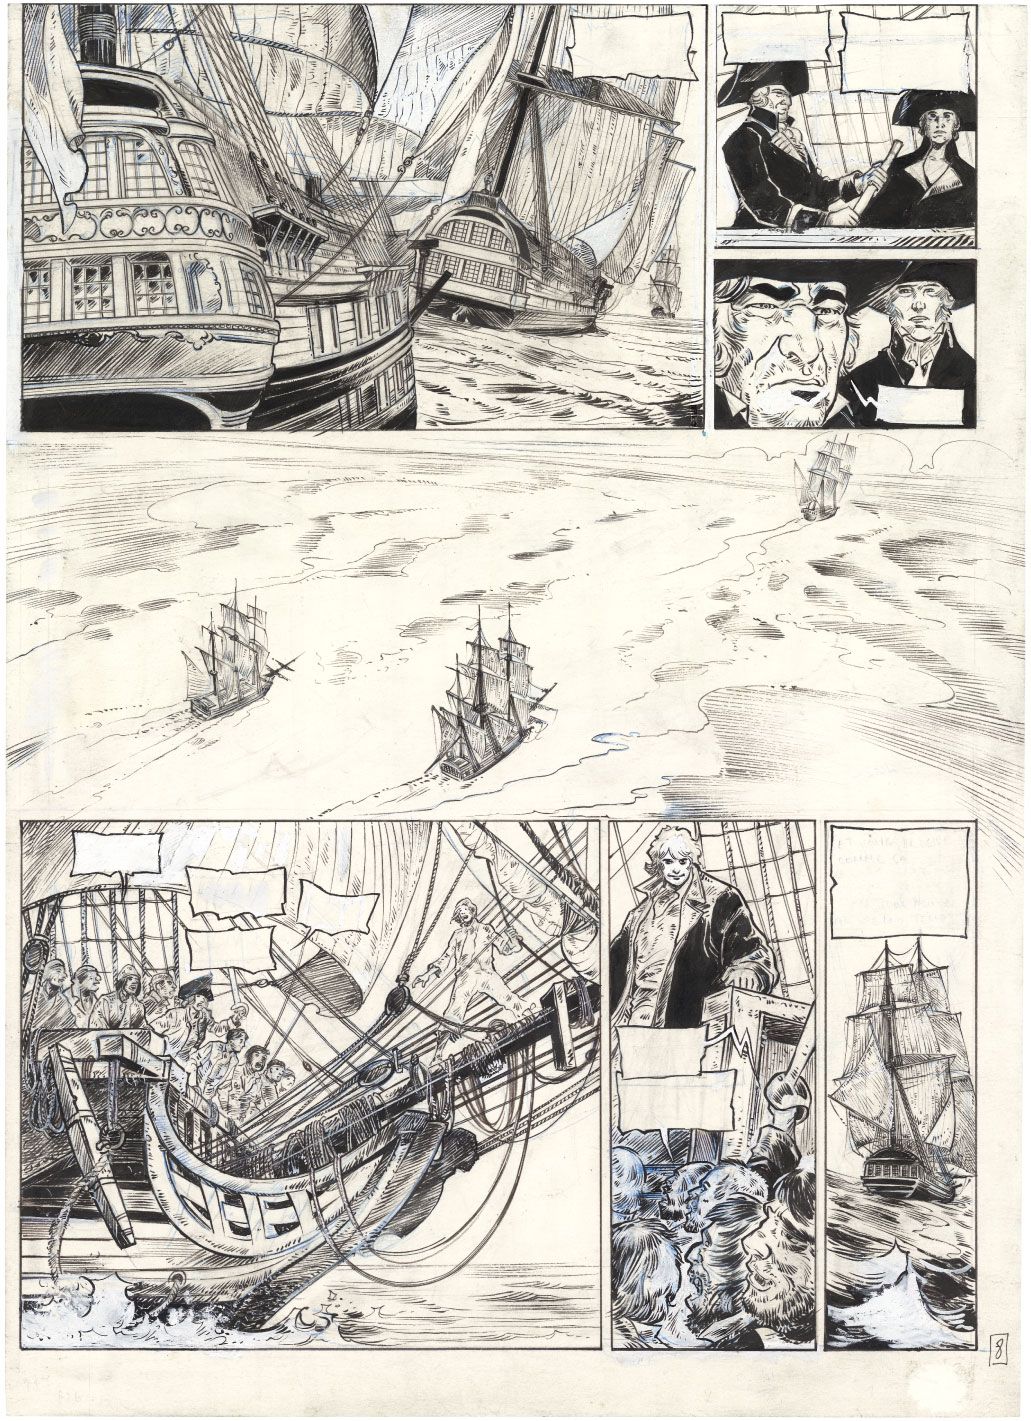 Guy MICHEL *Surcouf - 海虎
印度墨水和蓝色铅笔在纸上为画册的第8版。
Editions 12bis, 2013.